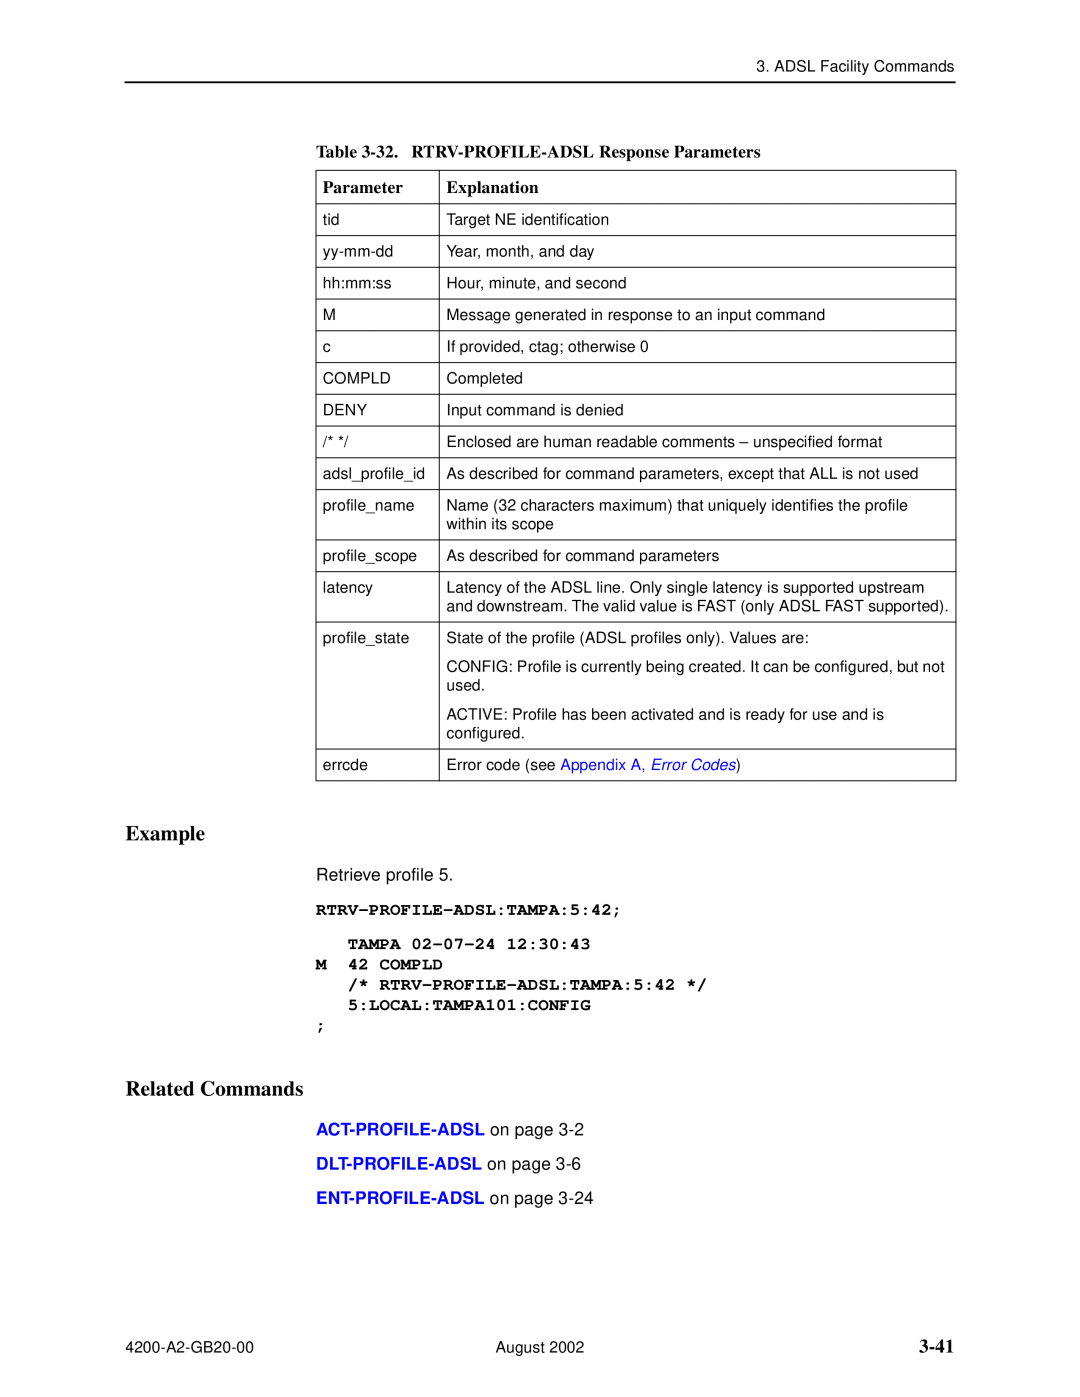 Paradyne 4200 manual 3-41, 32. RTRV-PROFILE-ADSL Response Parameters, RTRV-PROFILE-ADSLTAMPA542 TAMPA 02-07-24 M 42 COMPLD 